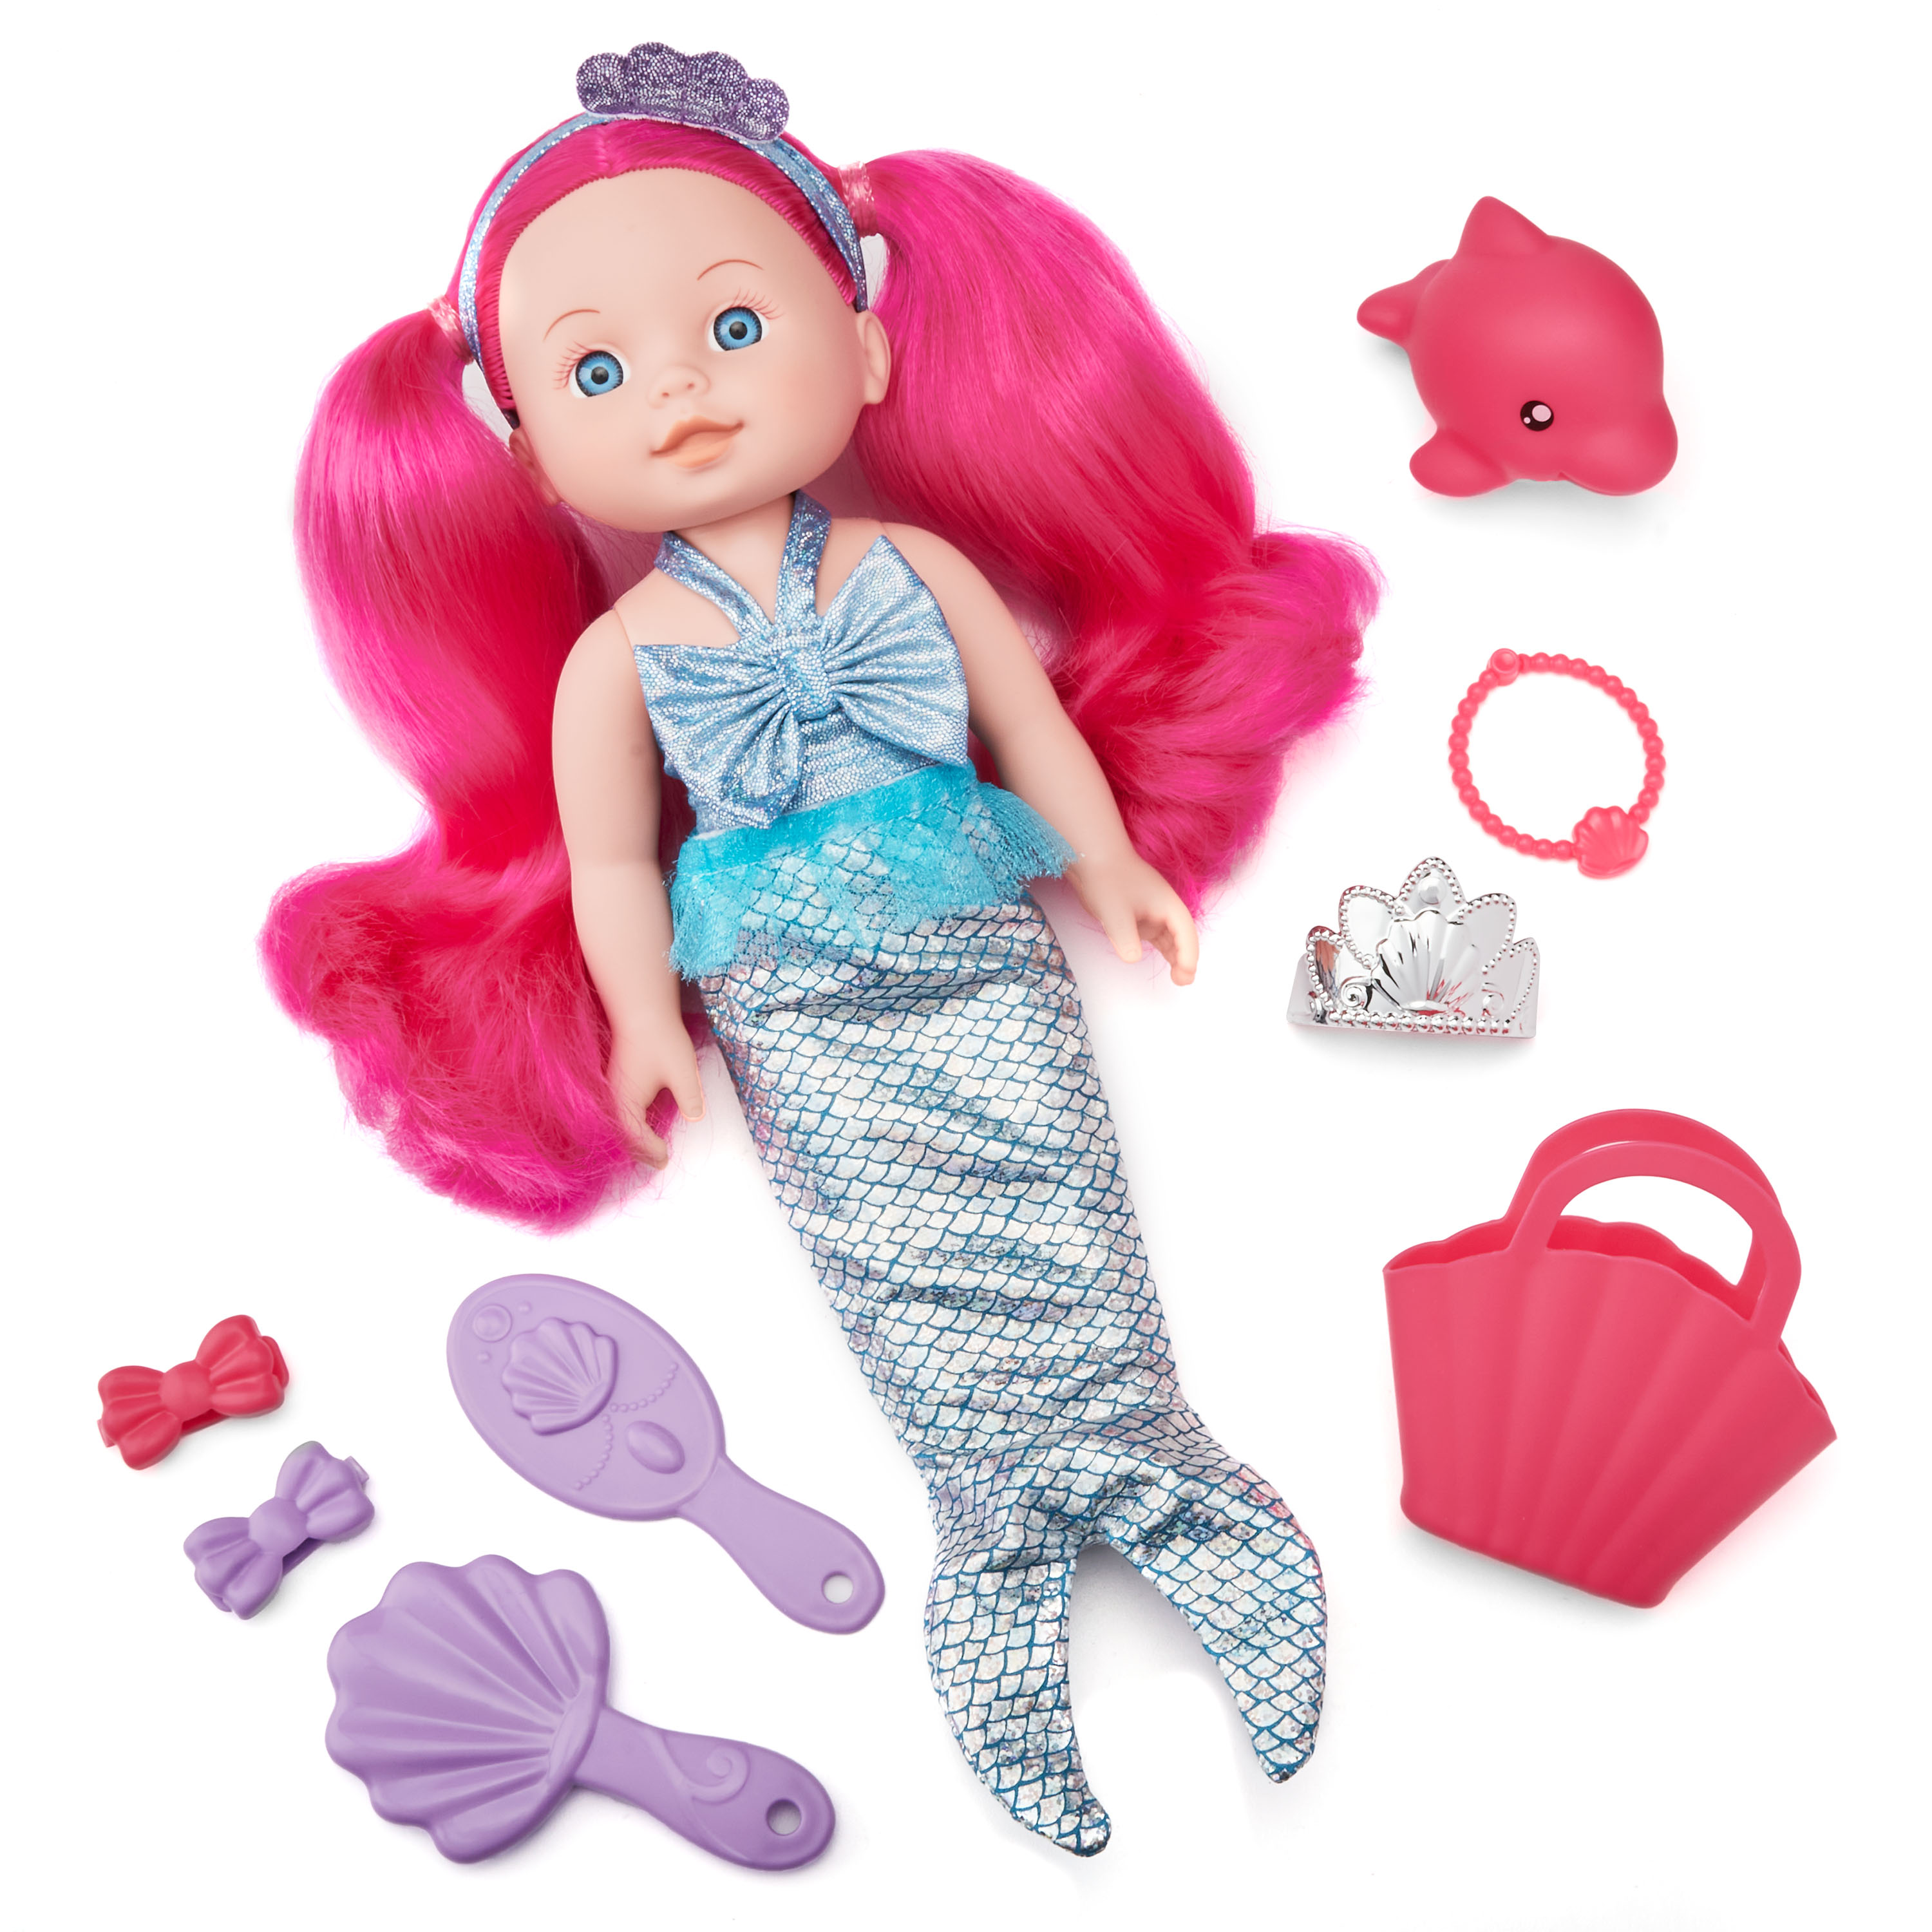 Kid Connection Mermaid Baby Doll Play Set, Blue Eyes, Pink Hair, Light Skin Tone - image 1 of 8